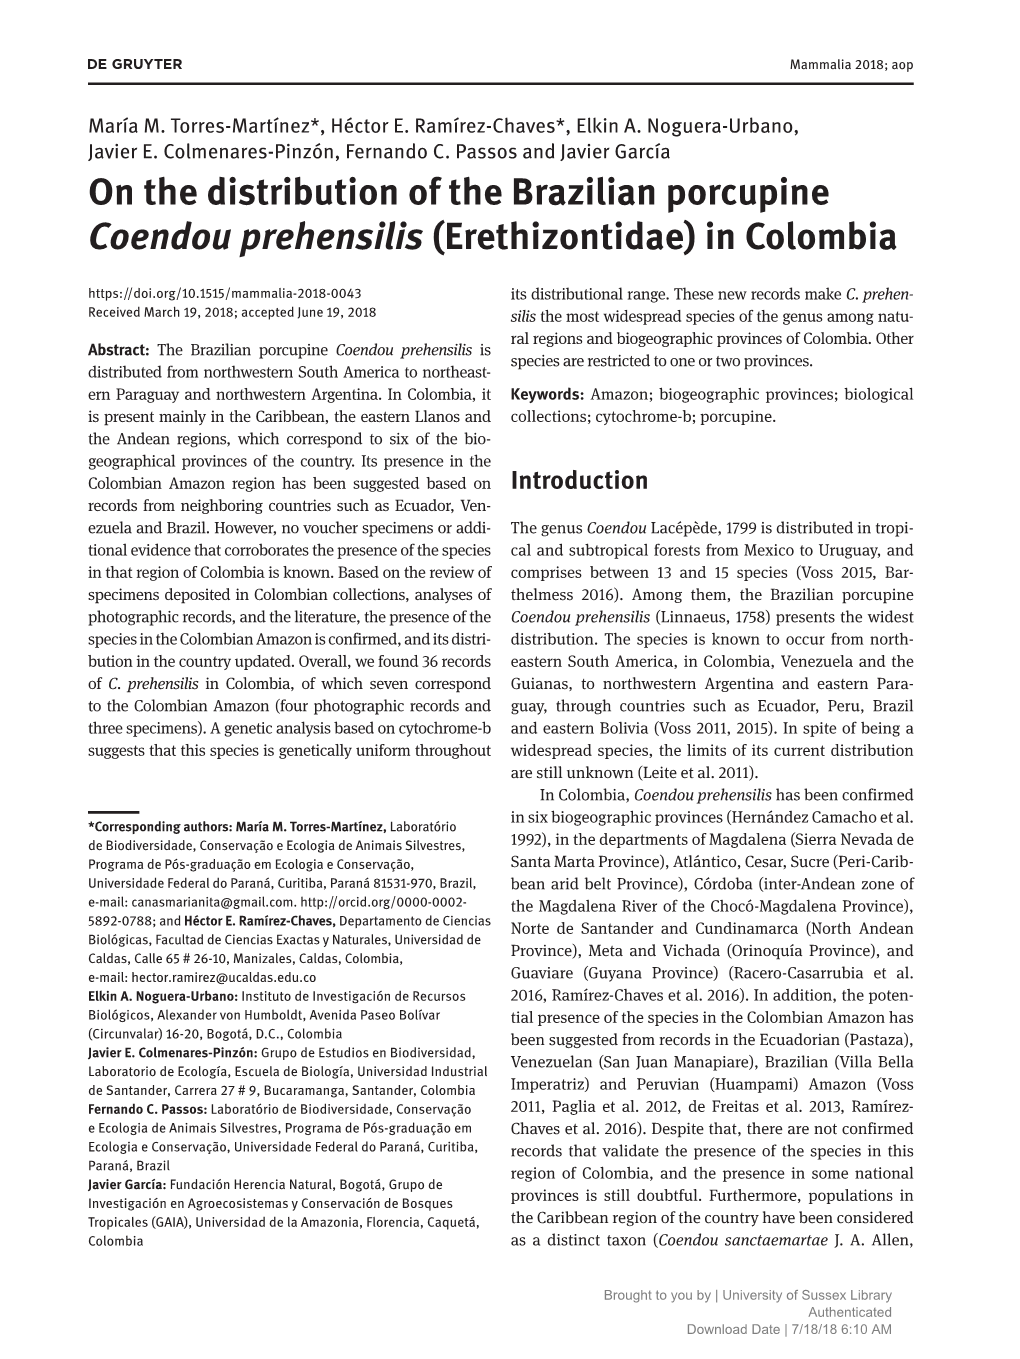 On the Distribution of the Brazilian Porcupine Coendou Prehensilis (Erethizontidae) in Colombia Its Distributional Range